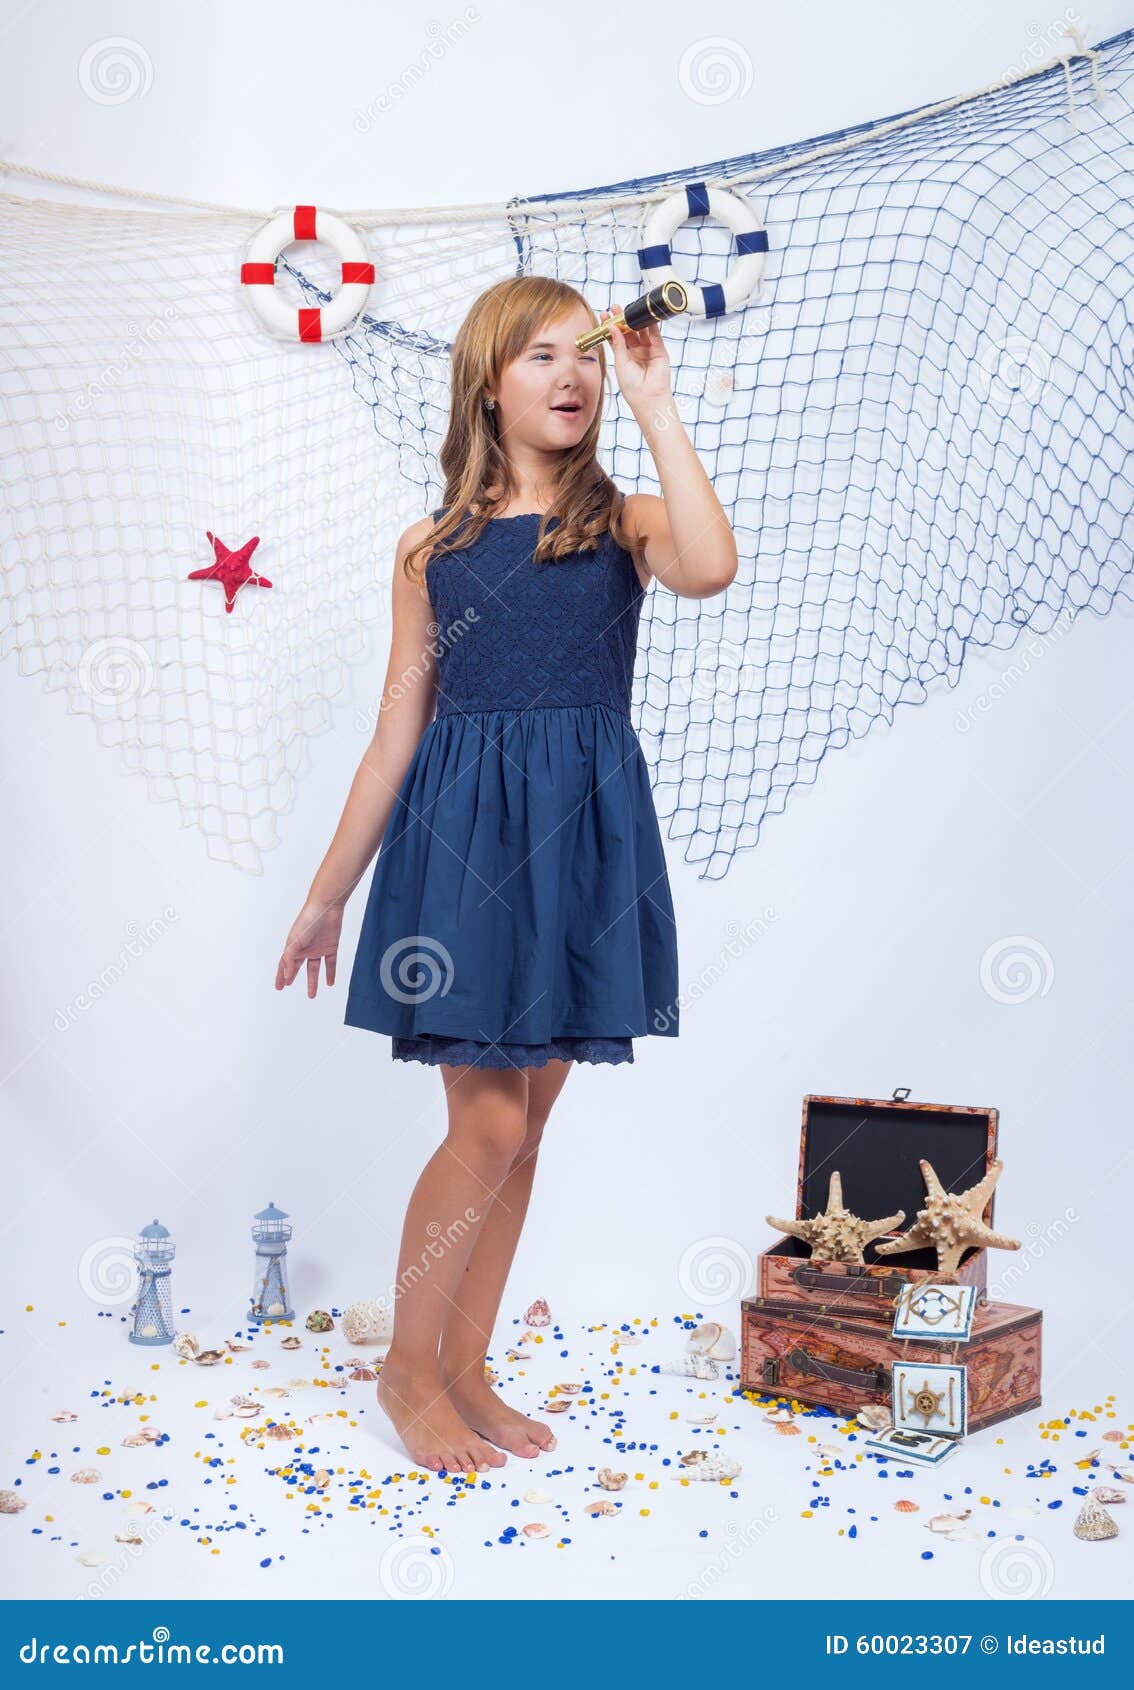 https://thumbs.dreamstime.com/z/portrait-beautiful-teen-girl-marine-style-looking-telescope-fishing-net-60023307.jpg